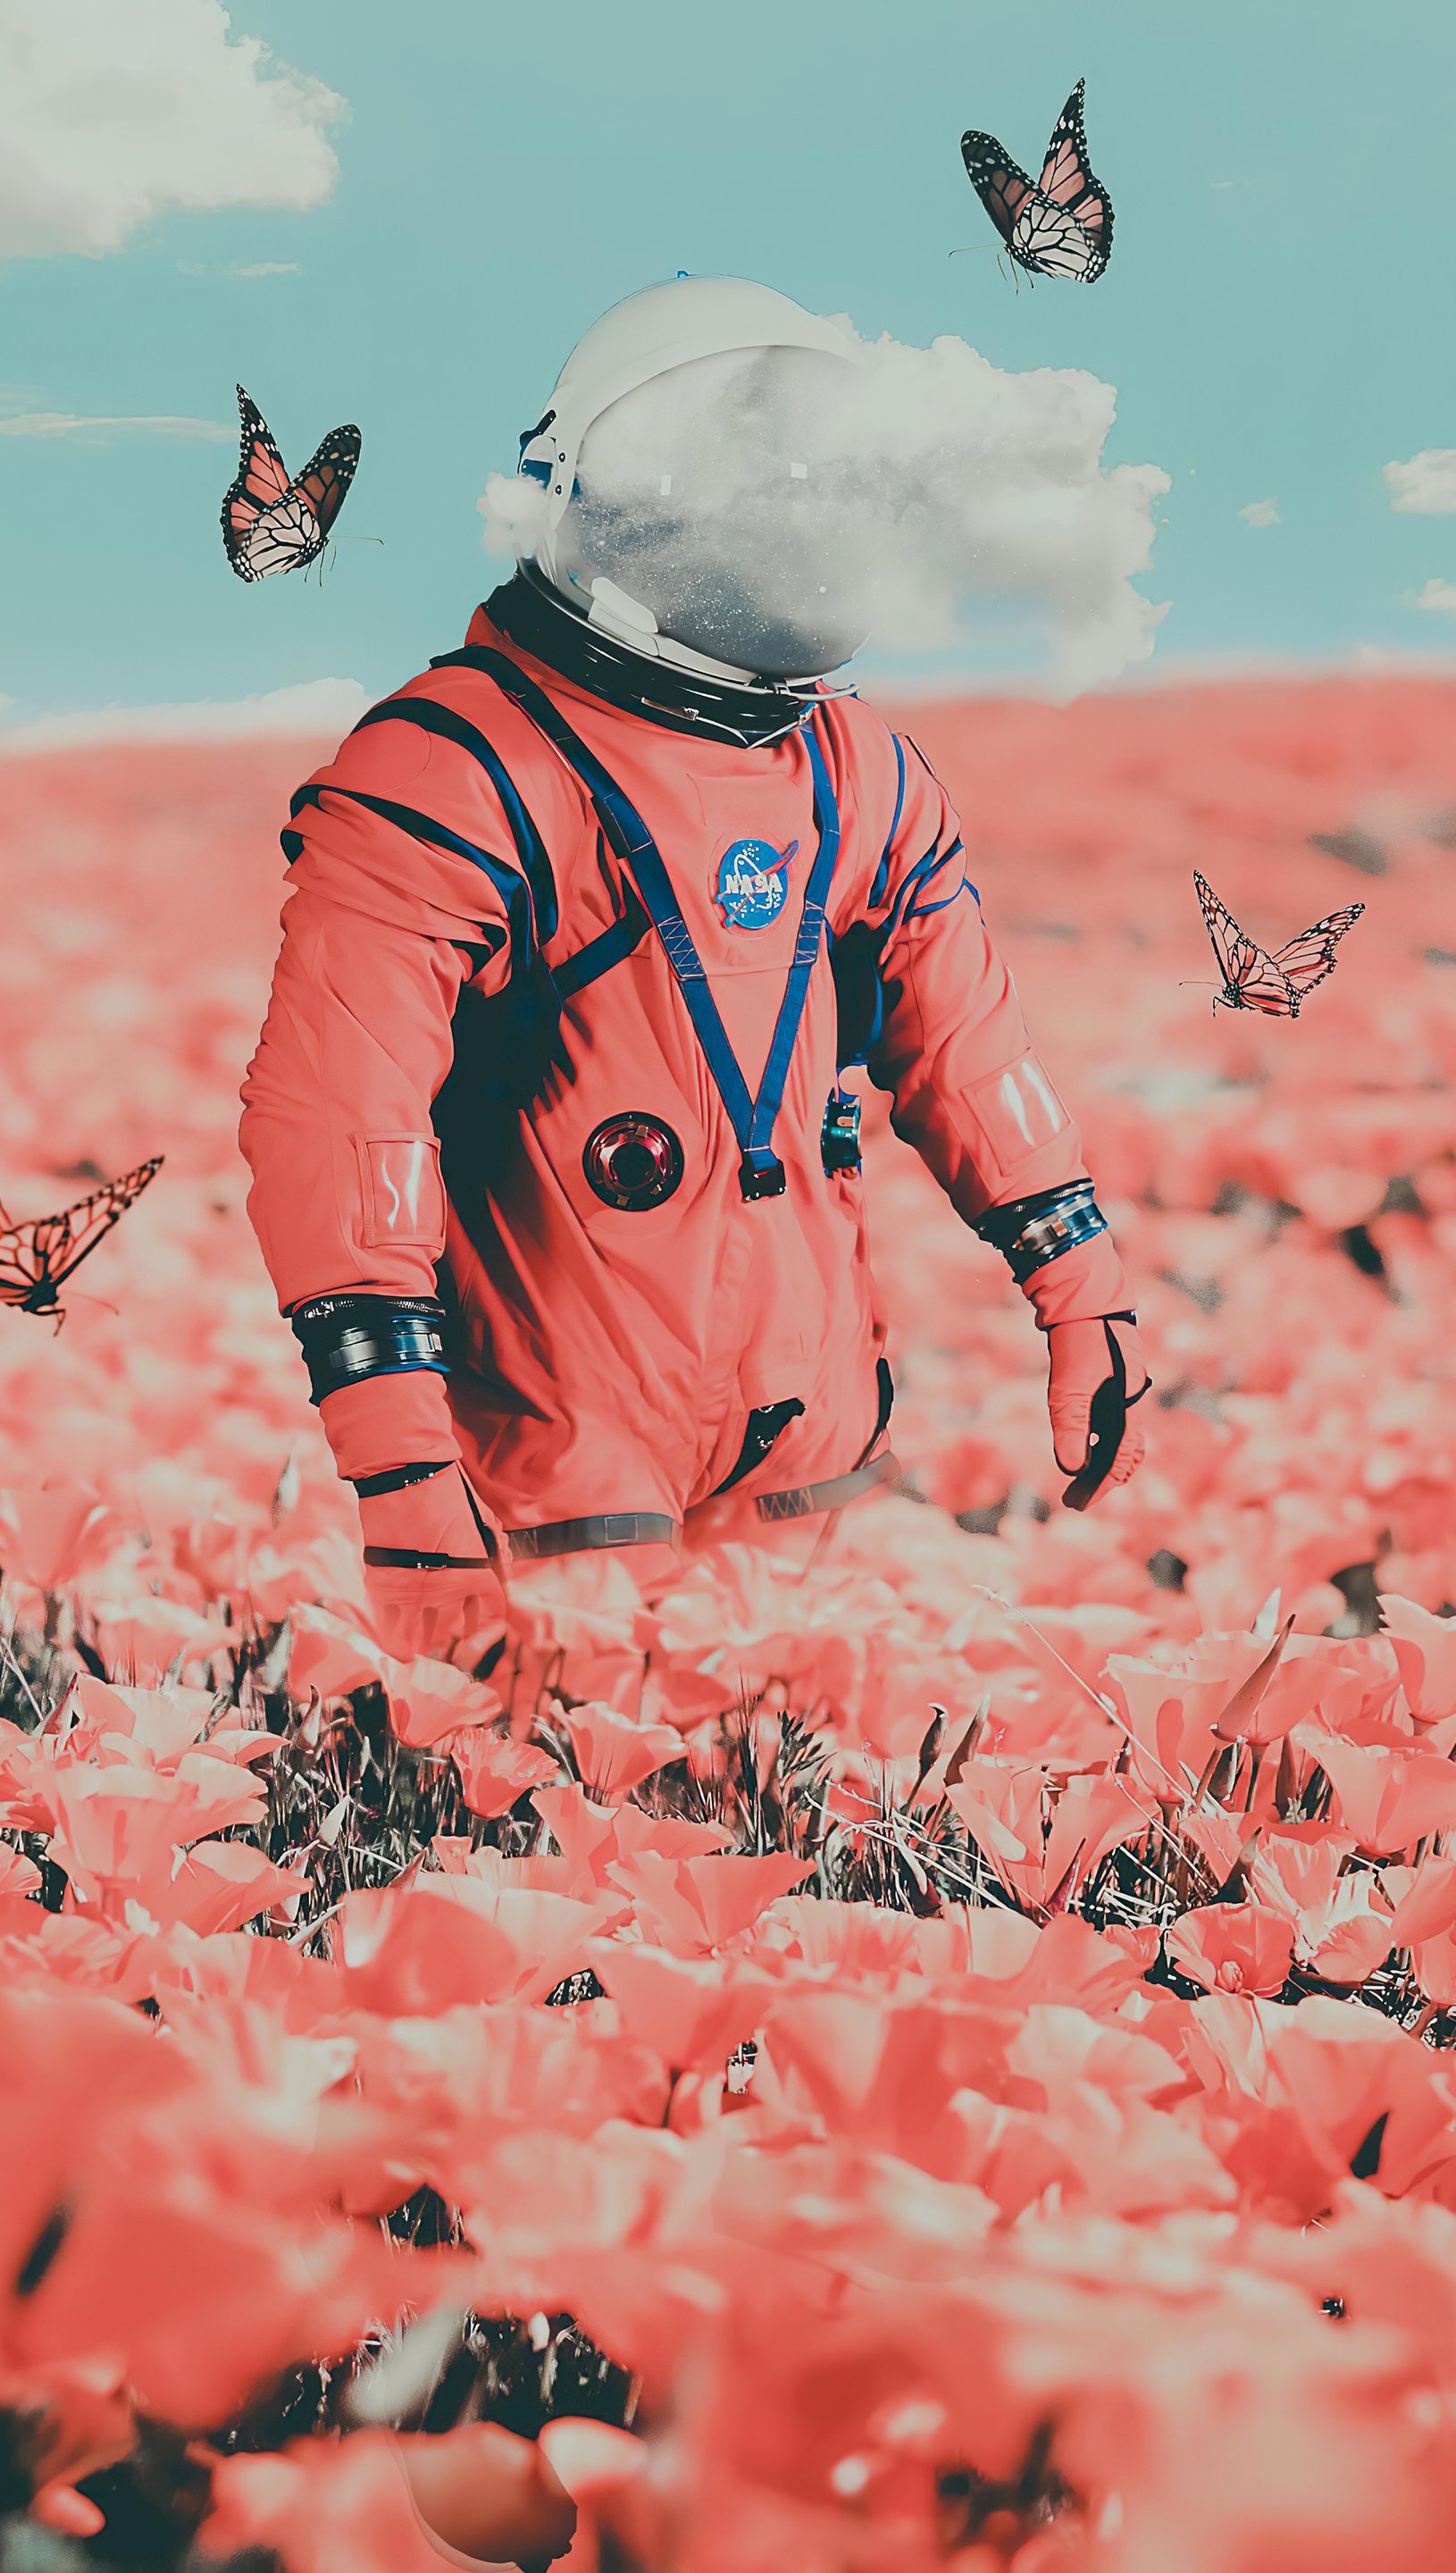 Wallpaper Astronaut between flowers and butterflies Vertical